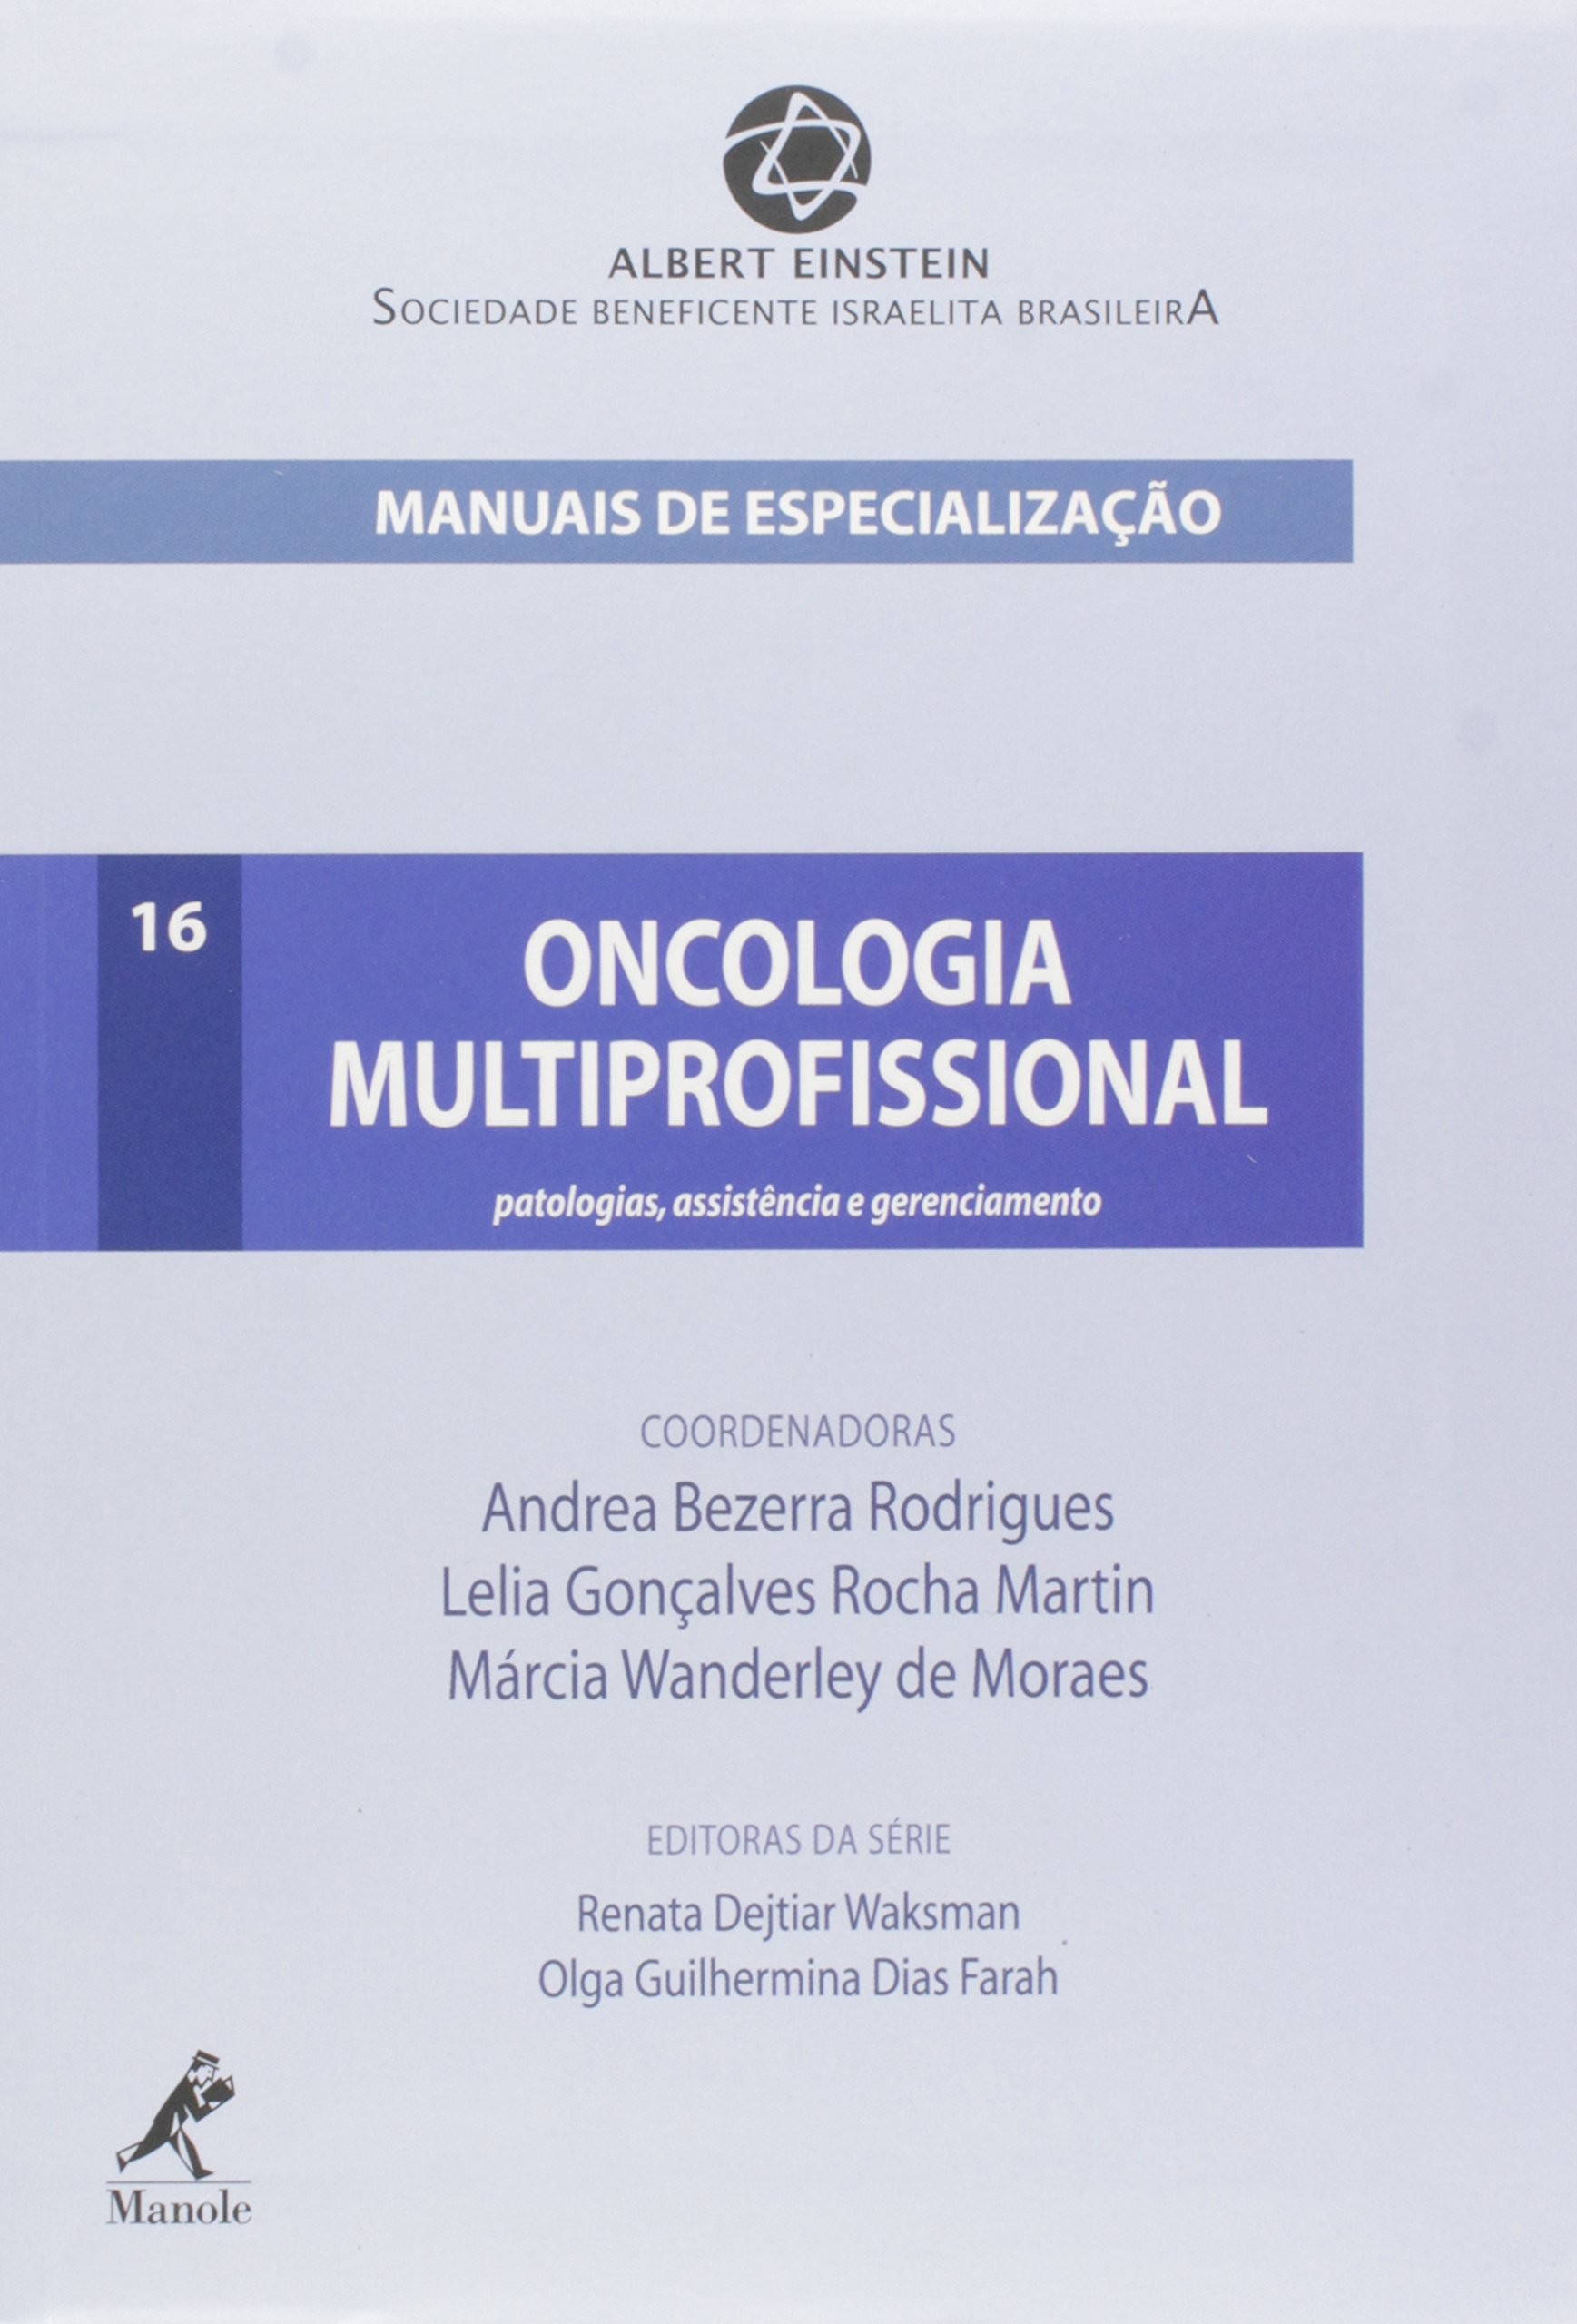 Oncologia Multiprofissional - Patologias, Assistência E Gerenciamento - Albert Einstein - Vol. 16